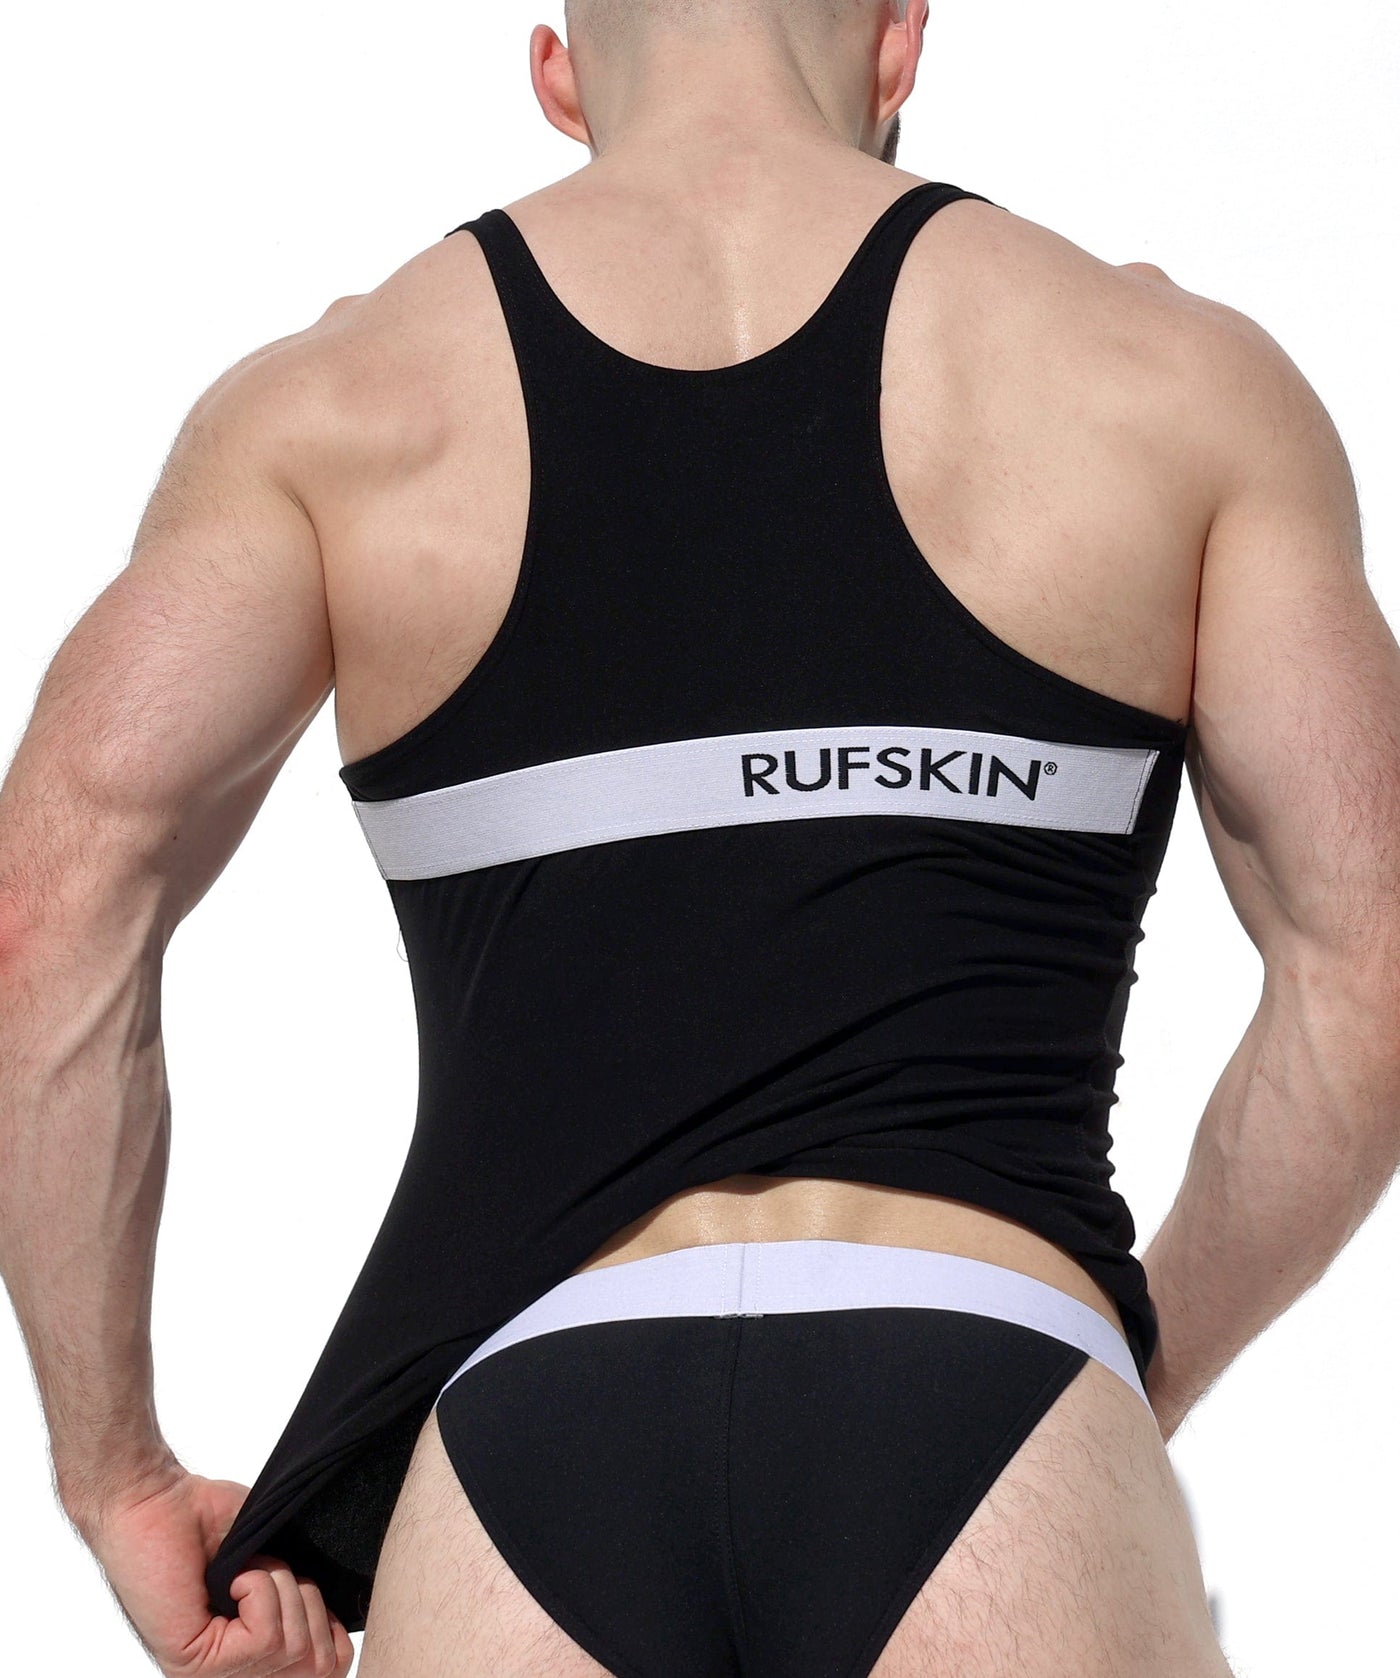 RUFSKIN® UNDERWEAR SALE  Shop Discounted Briefs, Jockstraps, Thongs, Boxers  and Bikinis